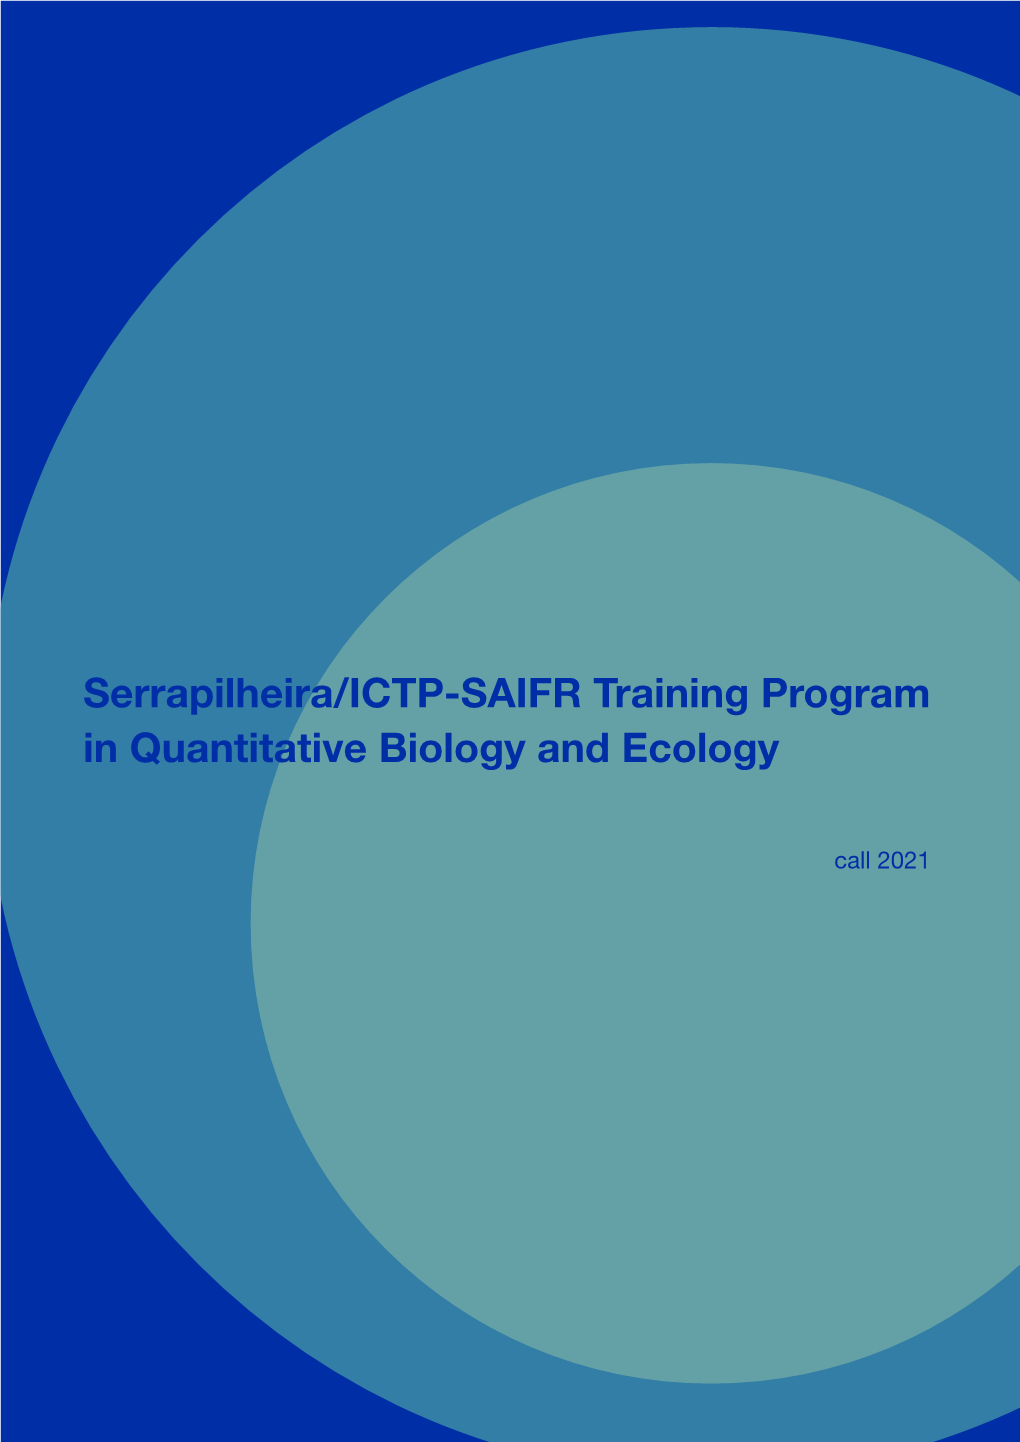 Serrapilheira/ICTP-SAIFR Training Program in Quantitative Biology and Ecology